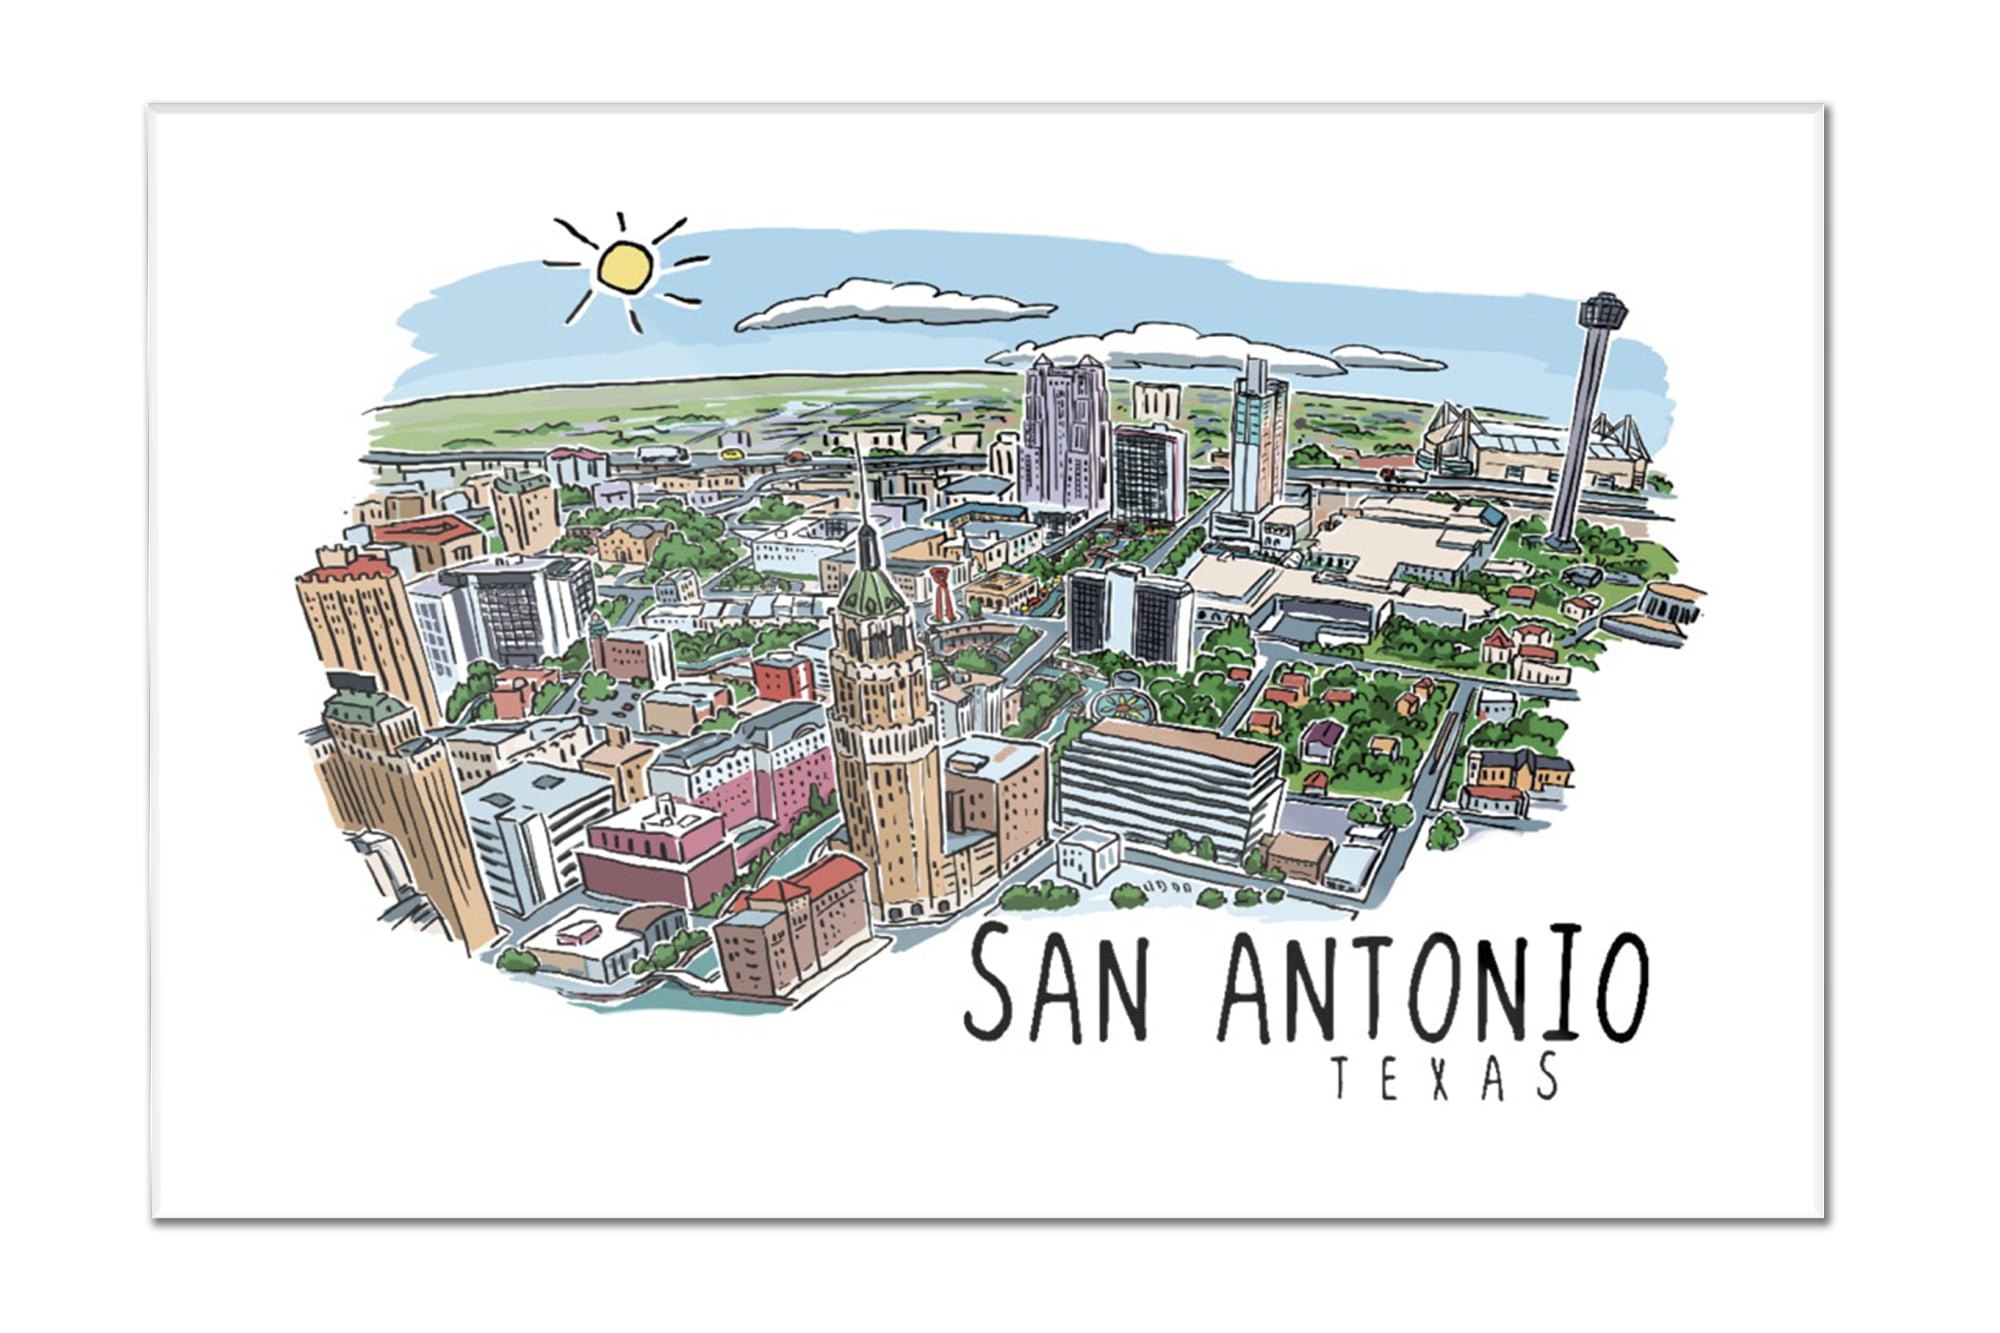 Backpage Com San Antonio Texas - Telegraph